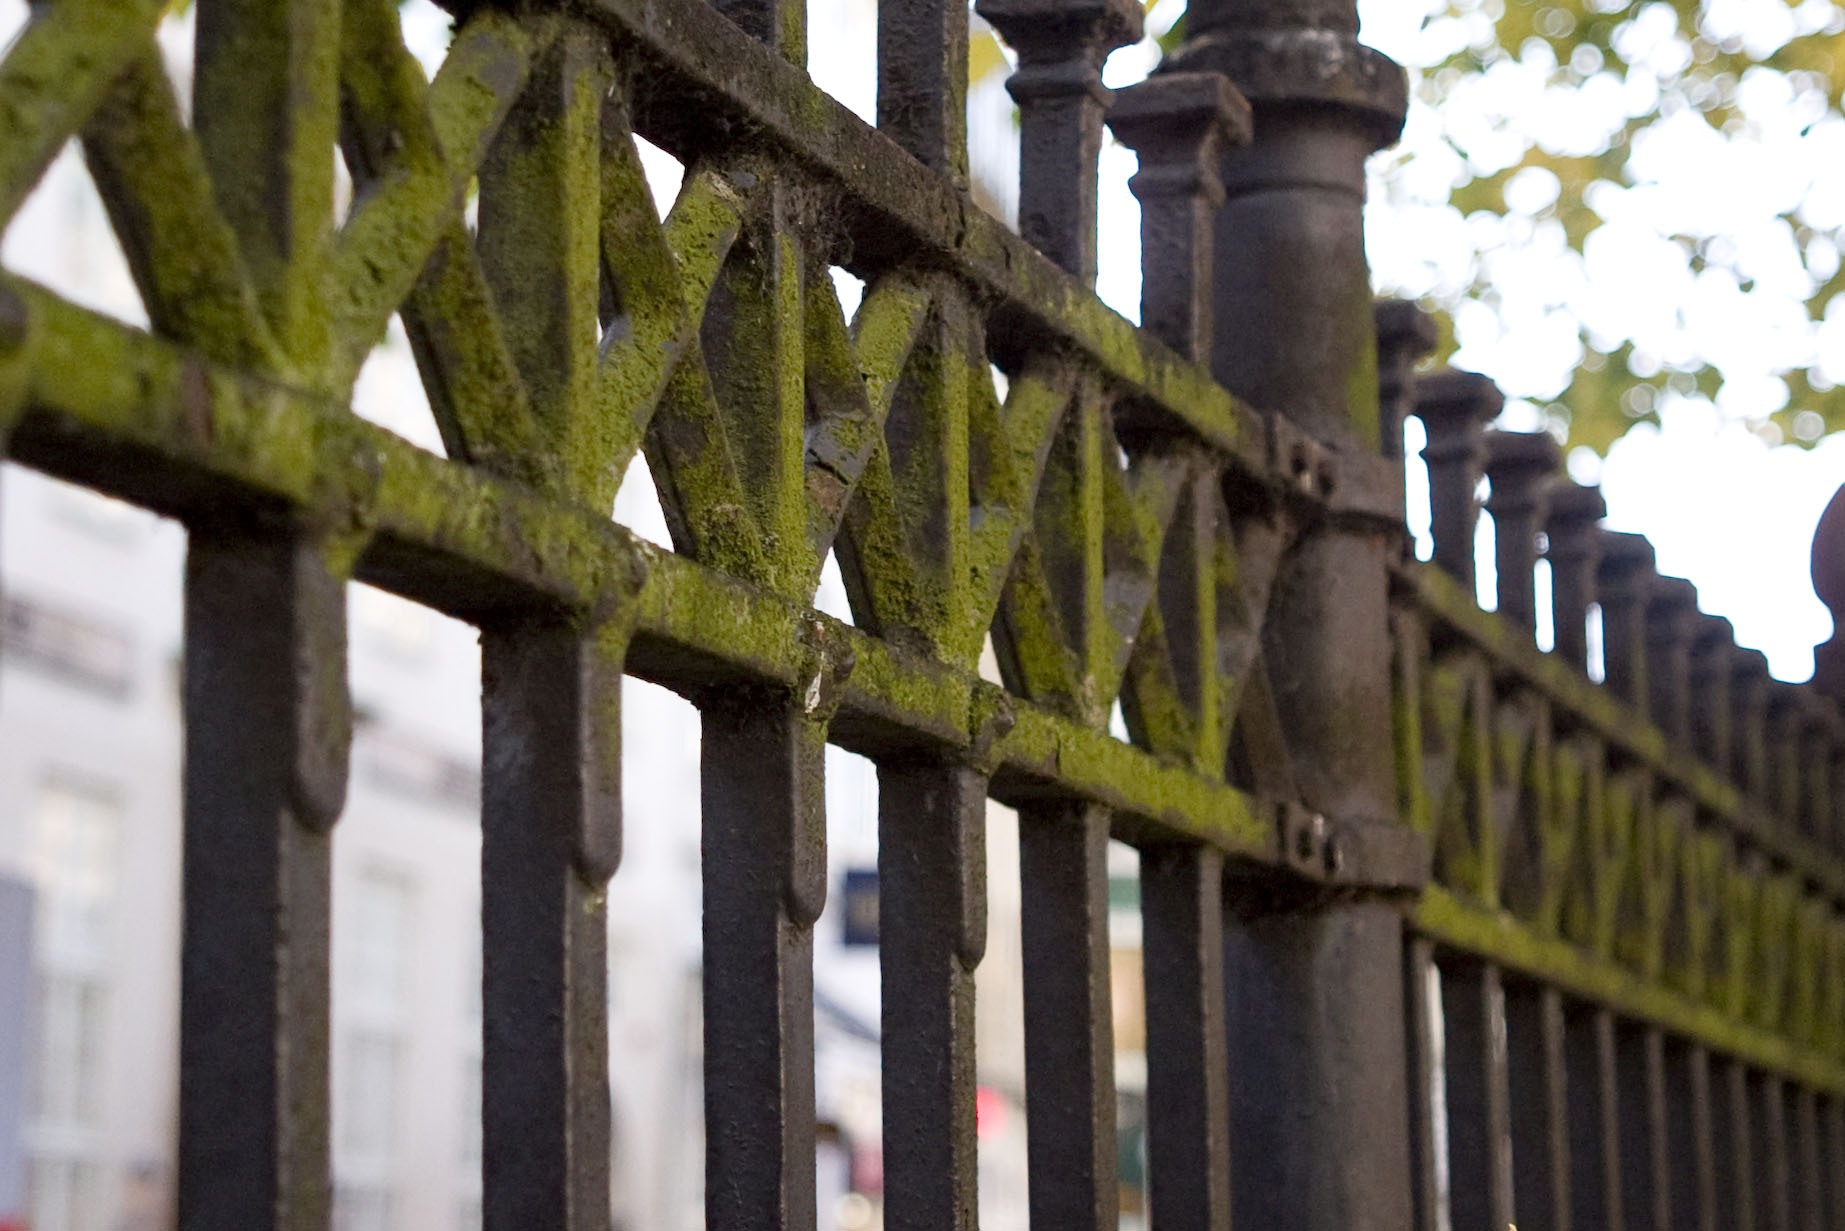 Fence rail at a Copenhagen churchyard. October 2008.